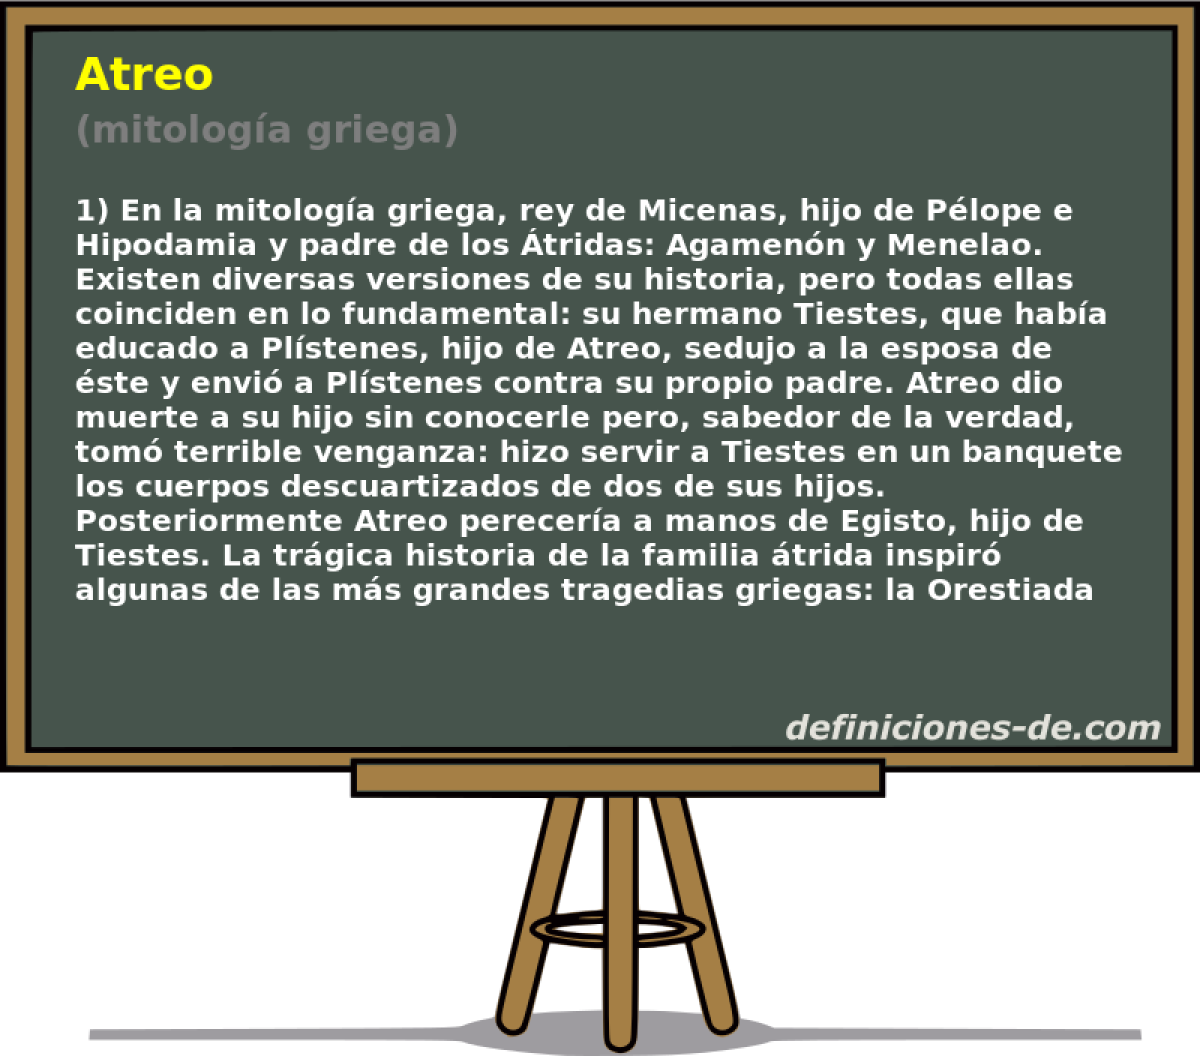 Atreo (mitologa griega)